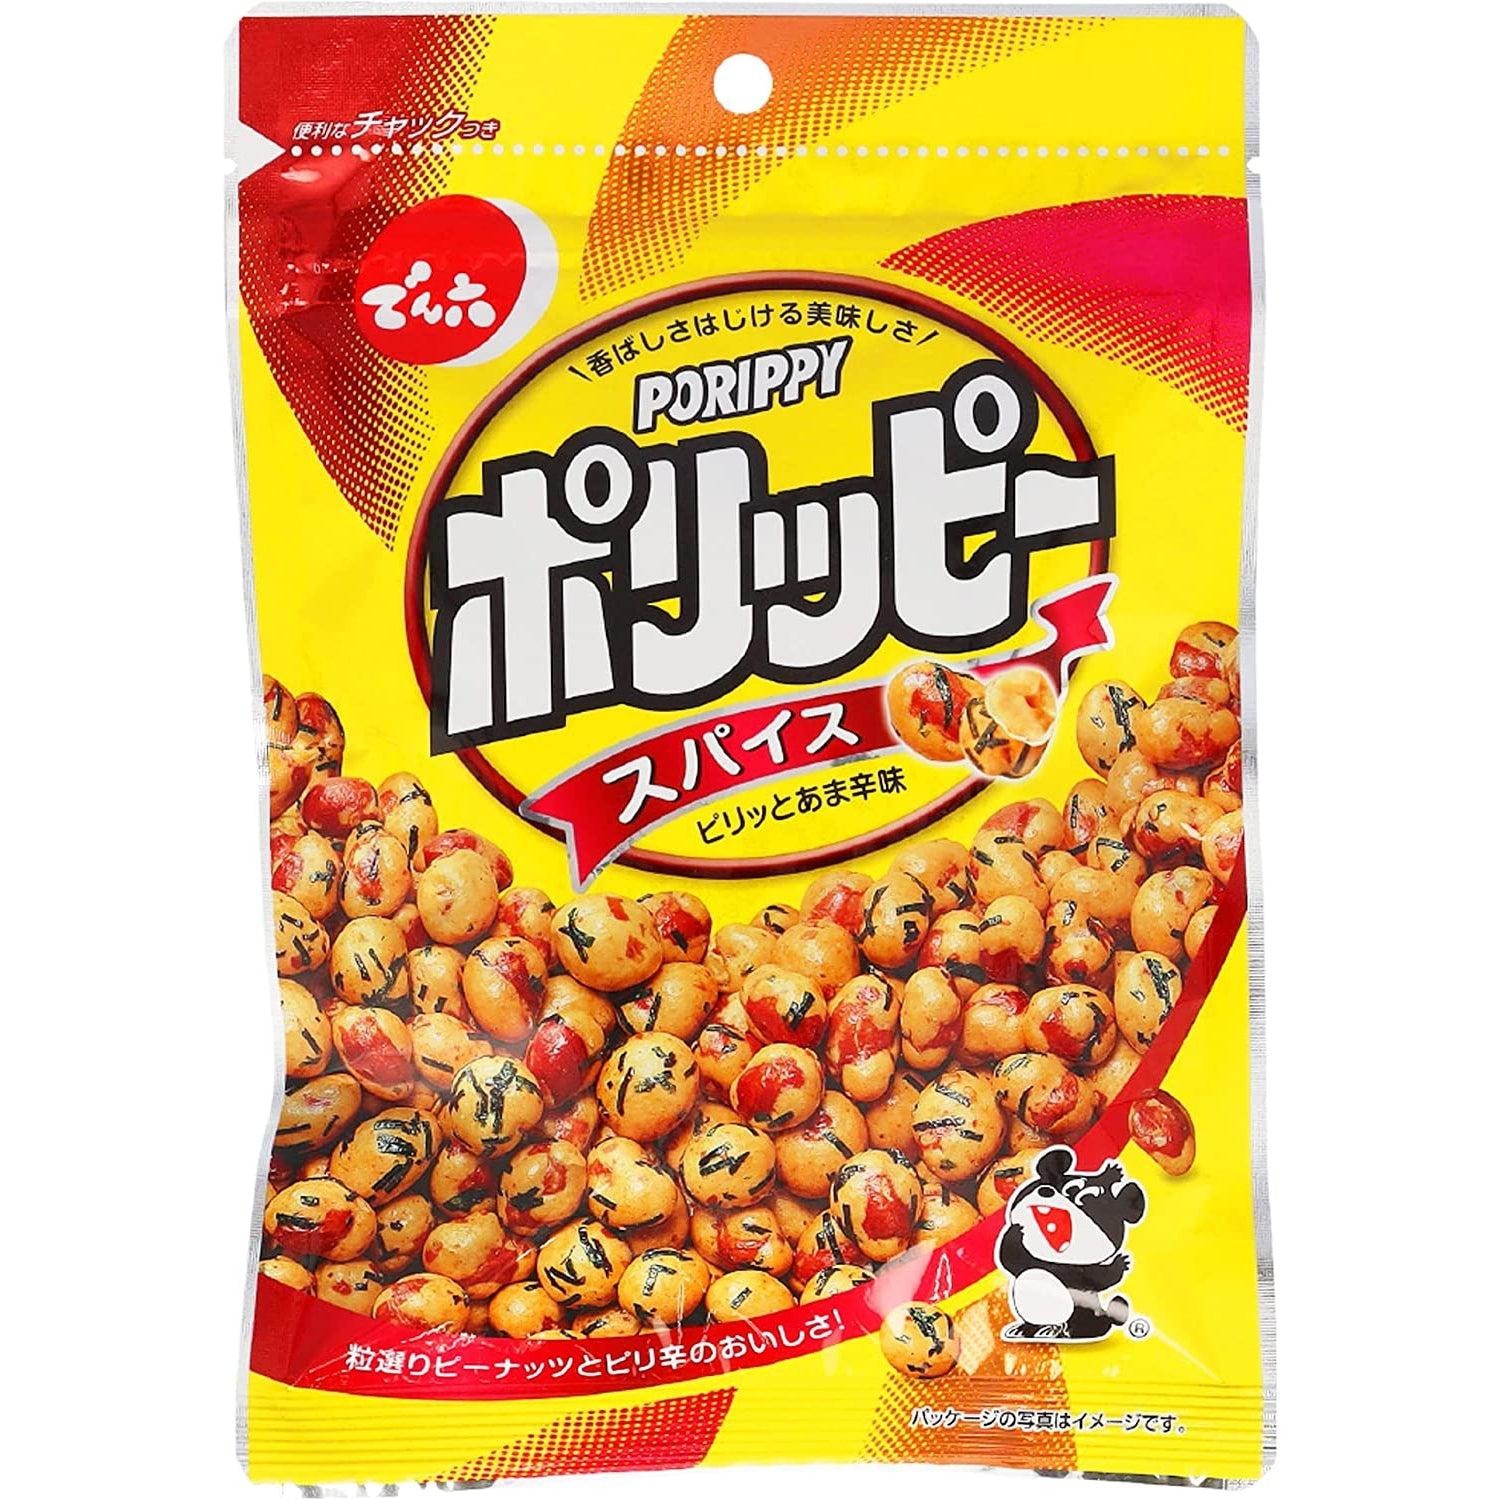 Denroku Porippy Peanut Snack Spicy Honey Flavor 112g (Pack of 3)